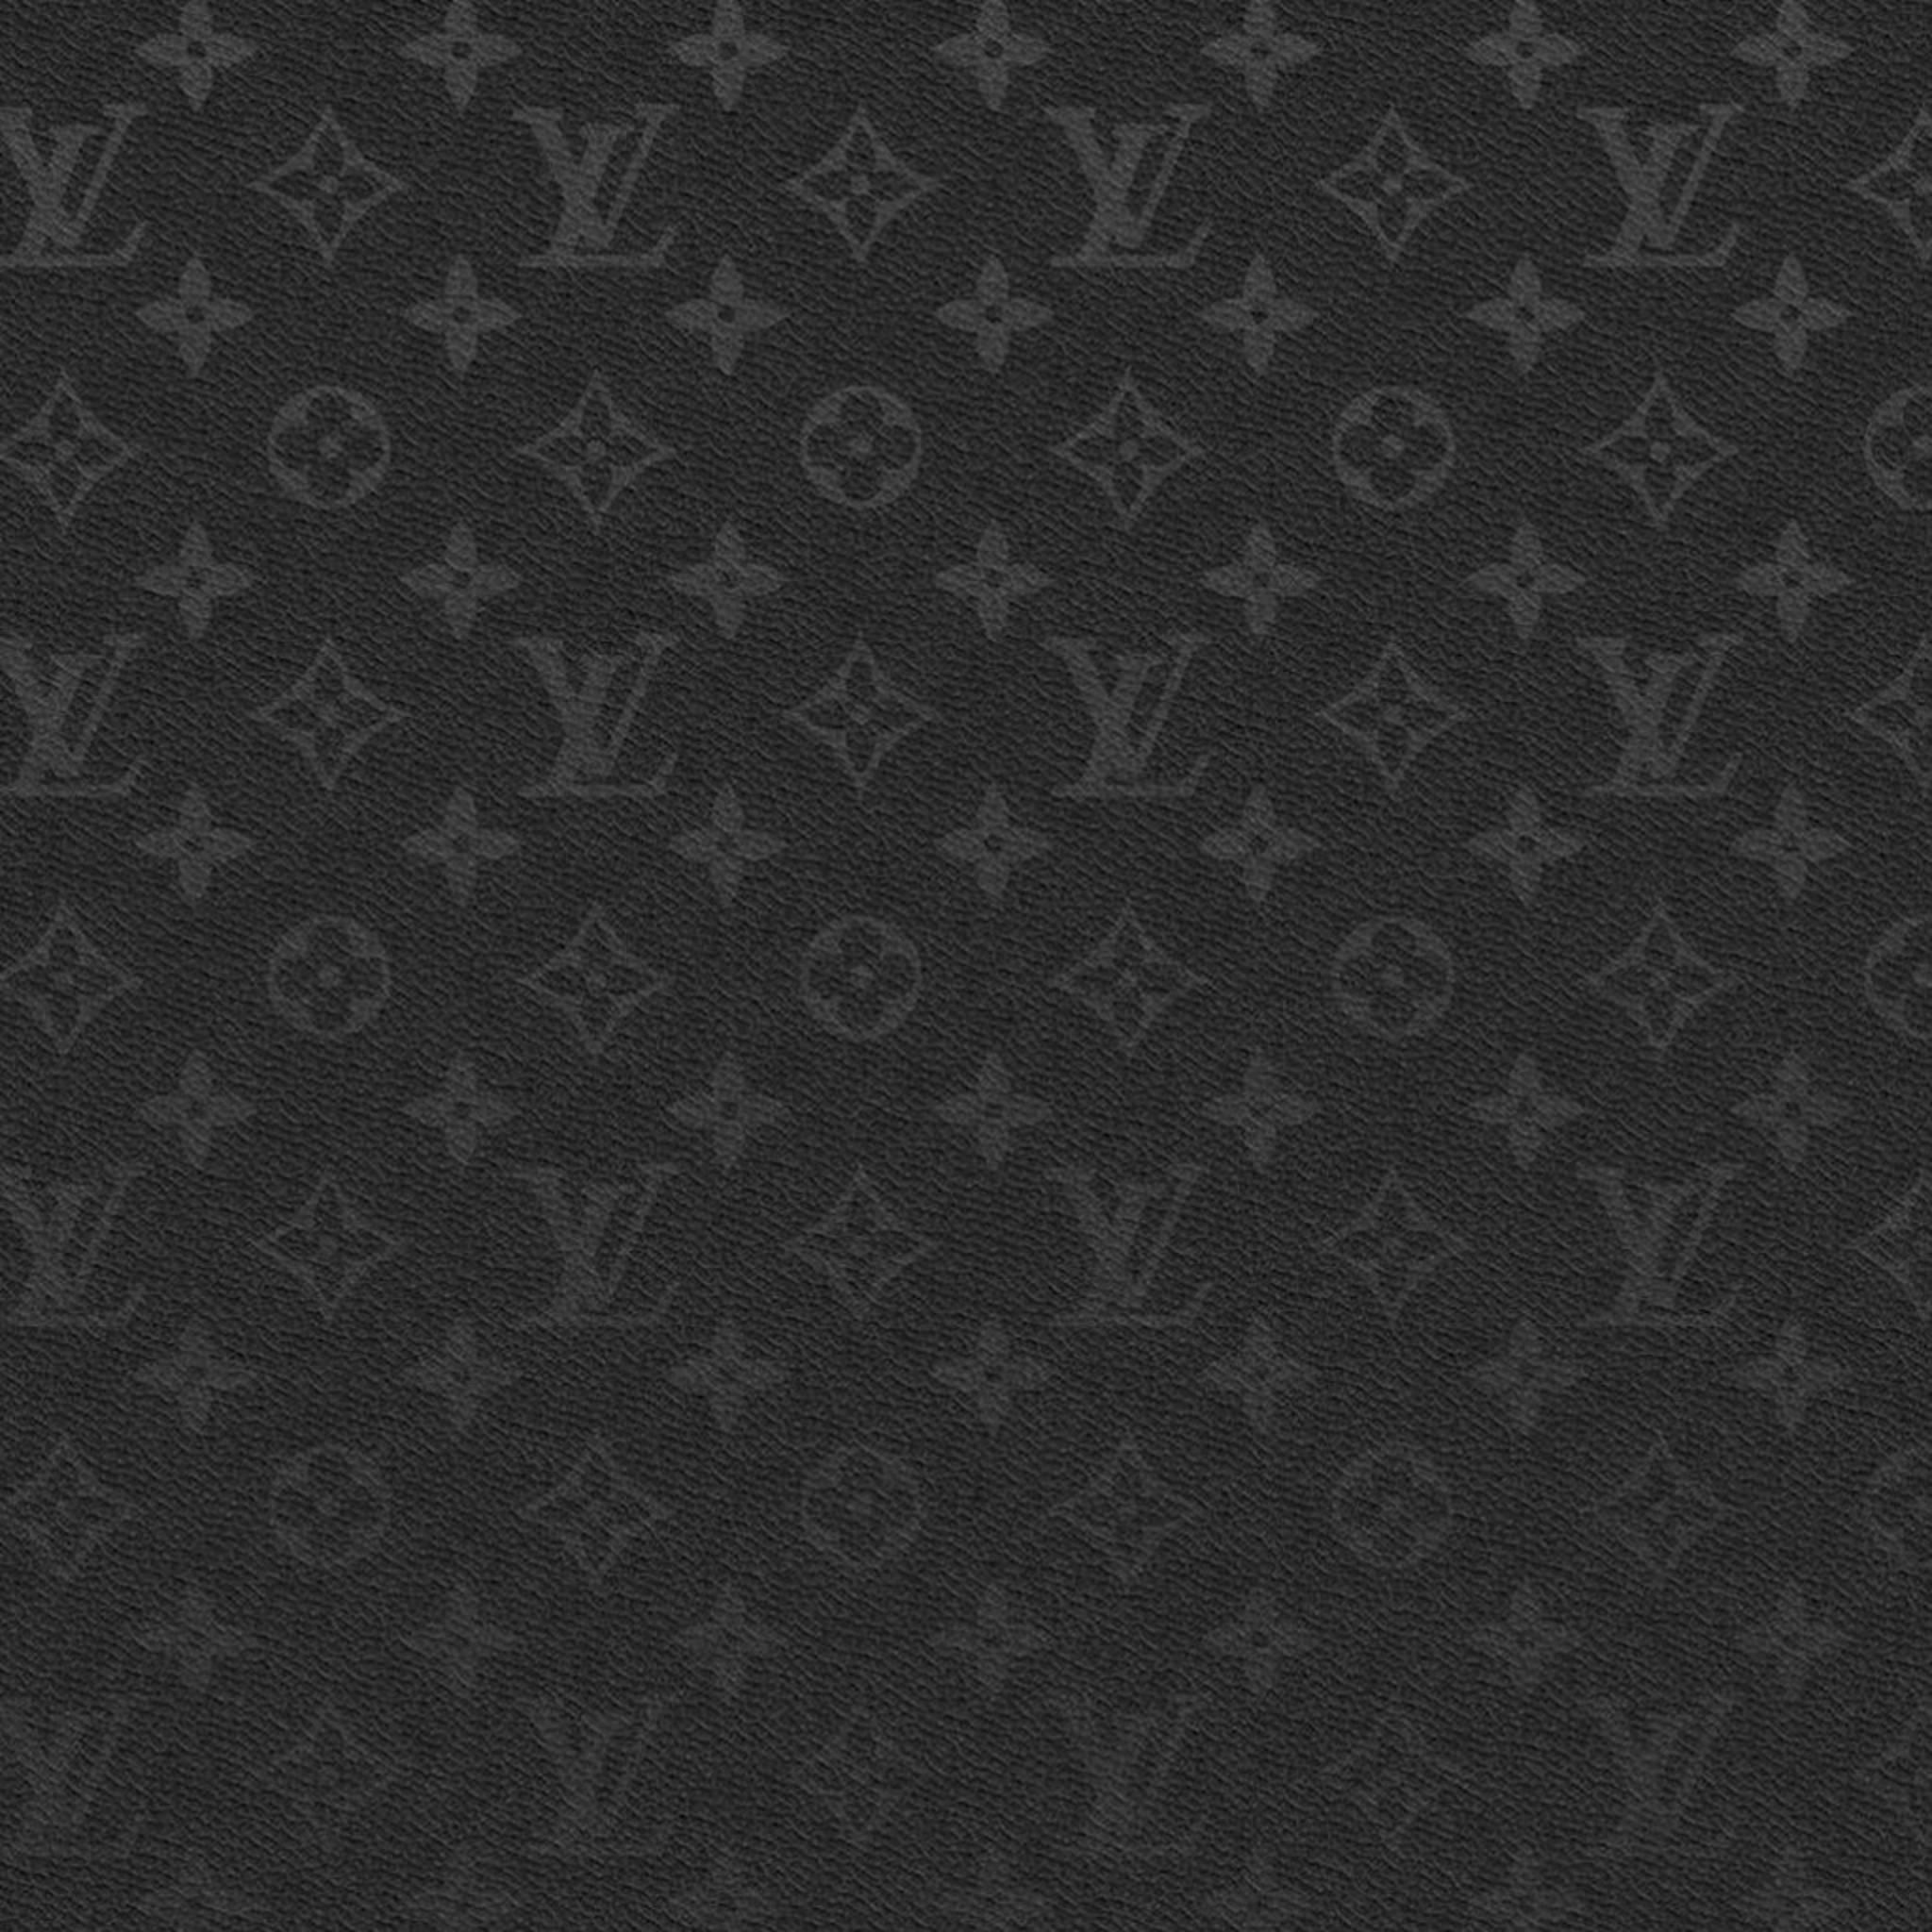 Wallpapers For Louis Vuitton Wallpaper Hd | HD Wallpapers Range